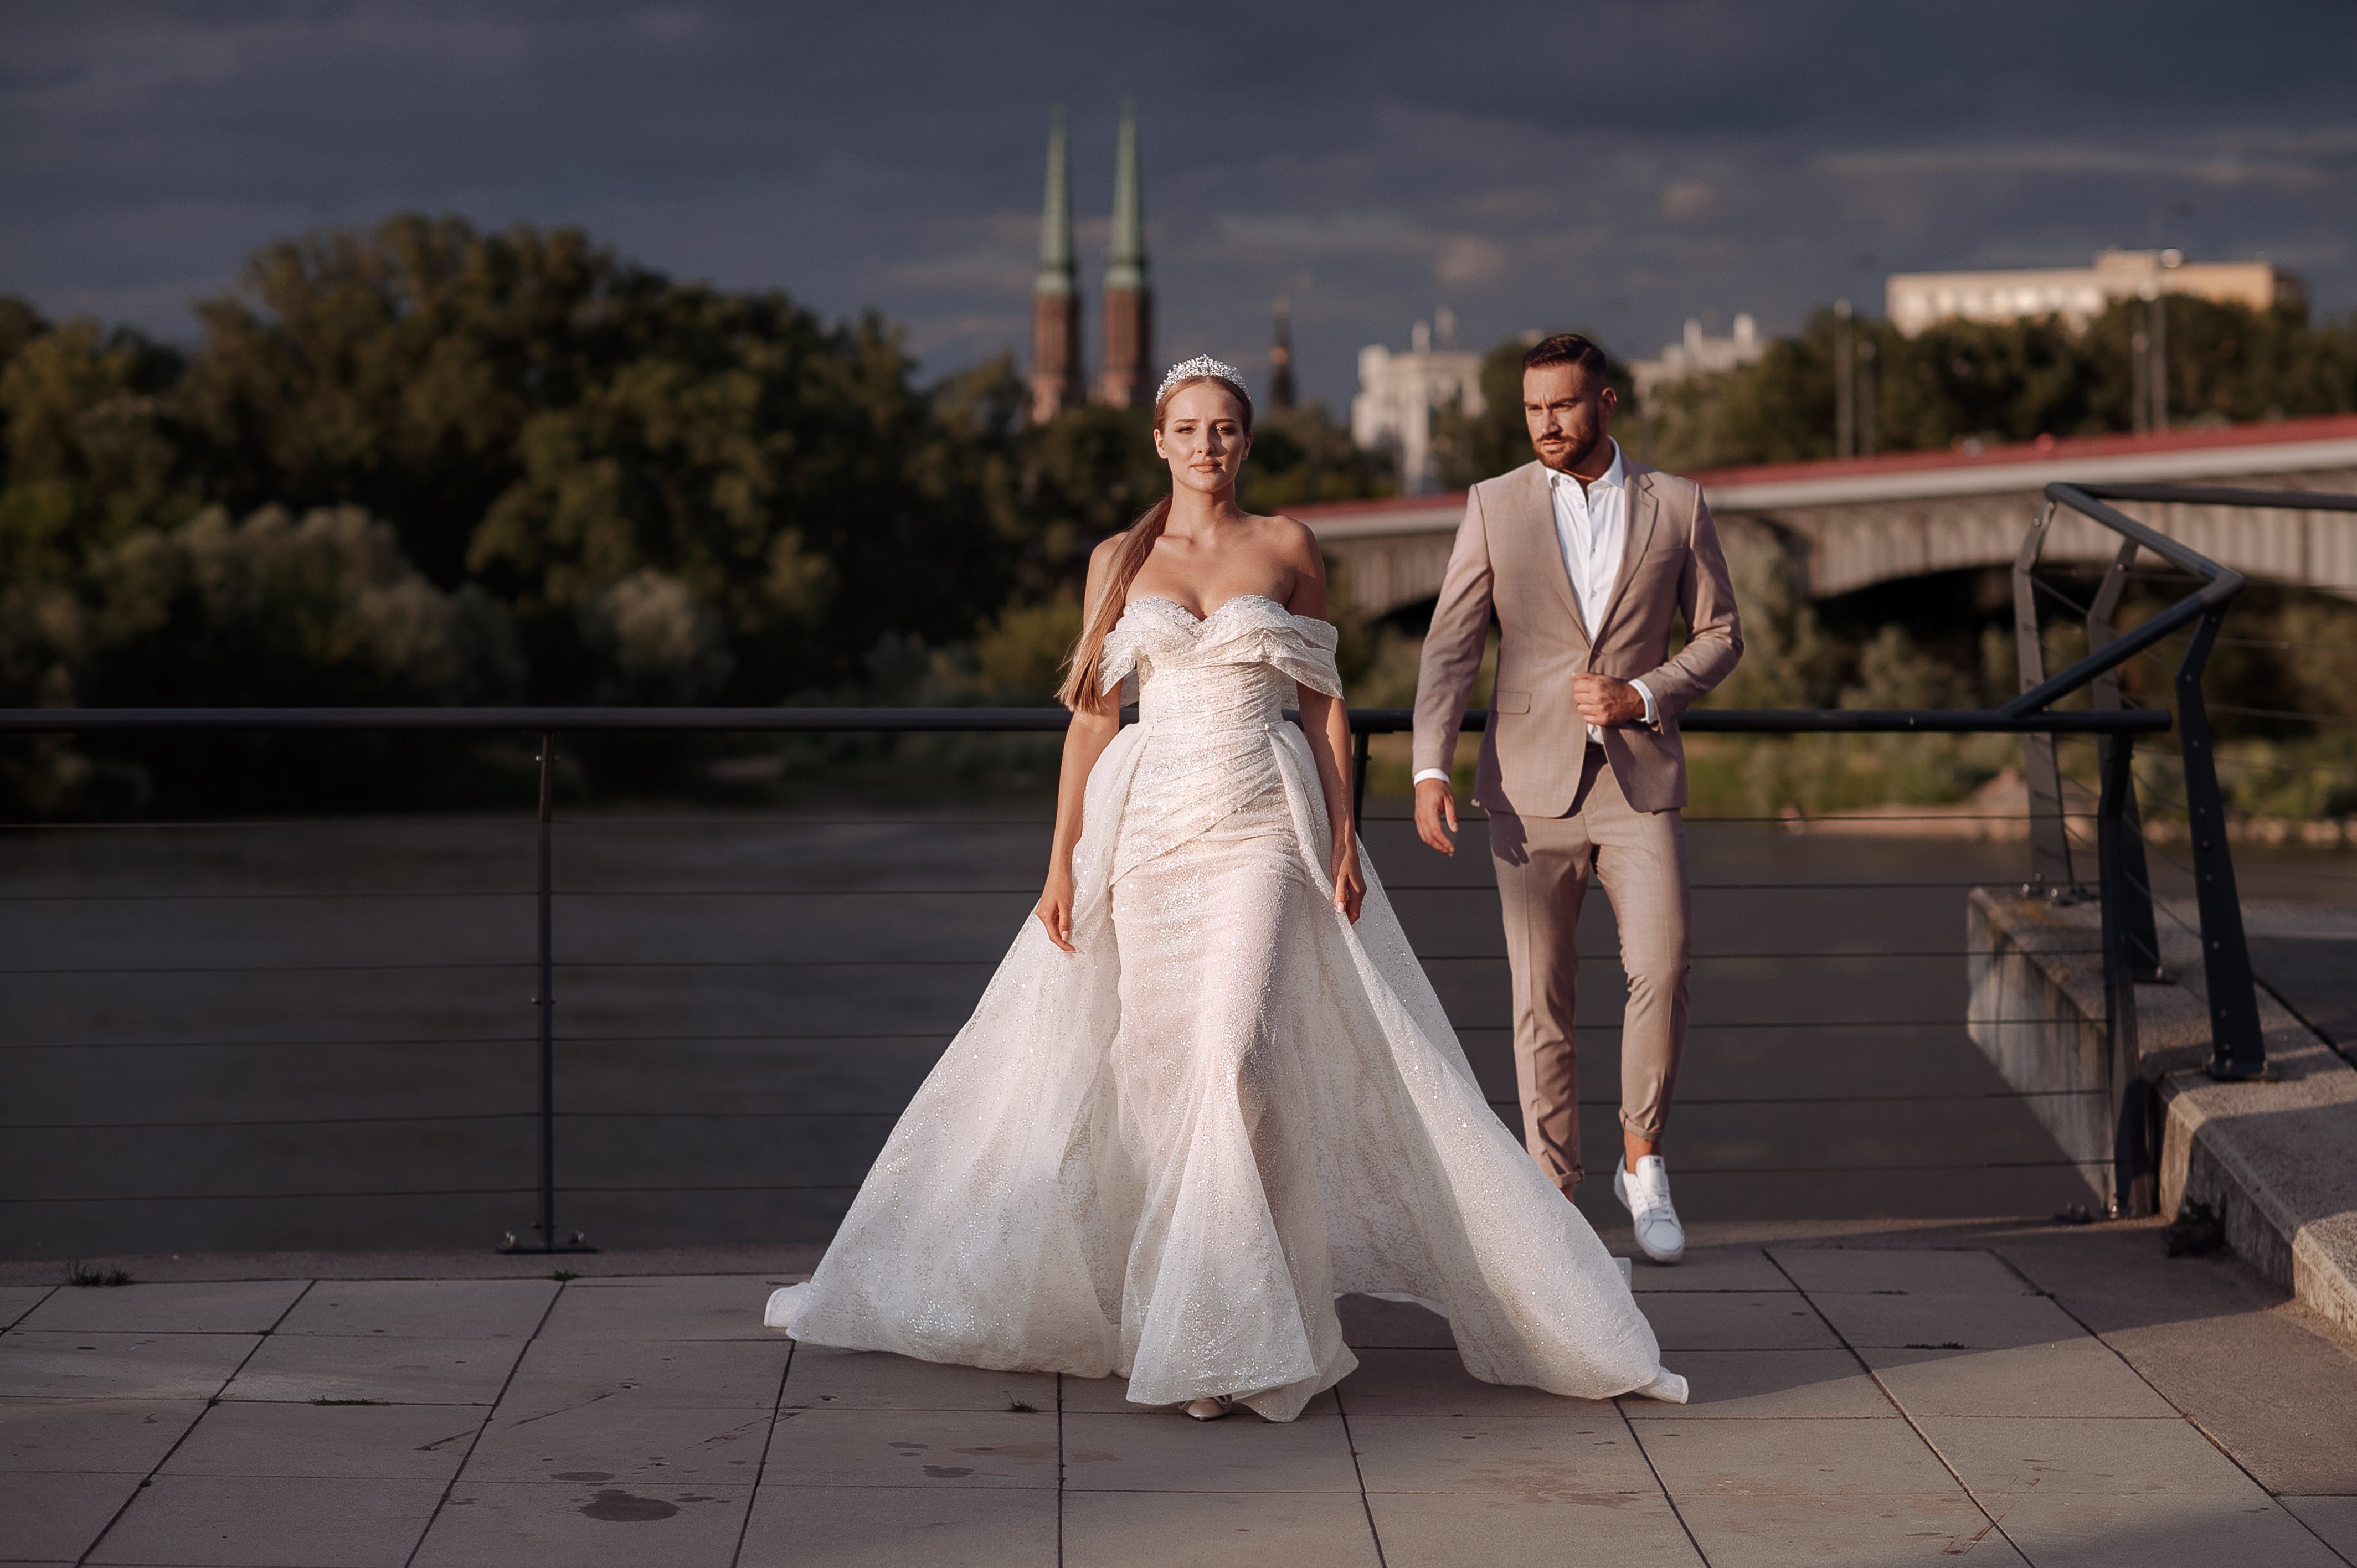 Natalie - Off the Shoulder Sparkliong Wedding Dress with Detachable Train - Maxima Bridal